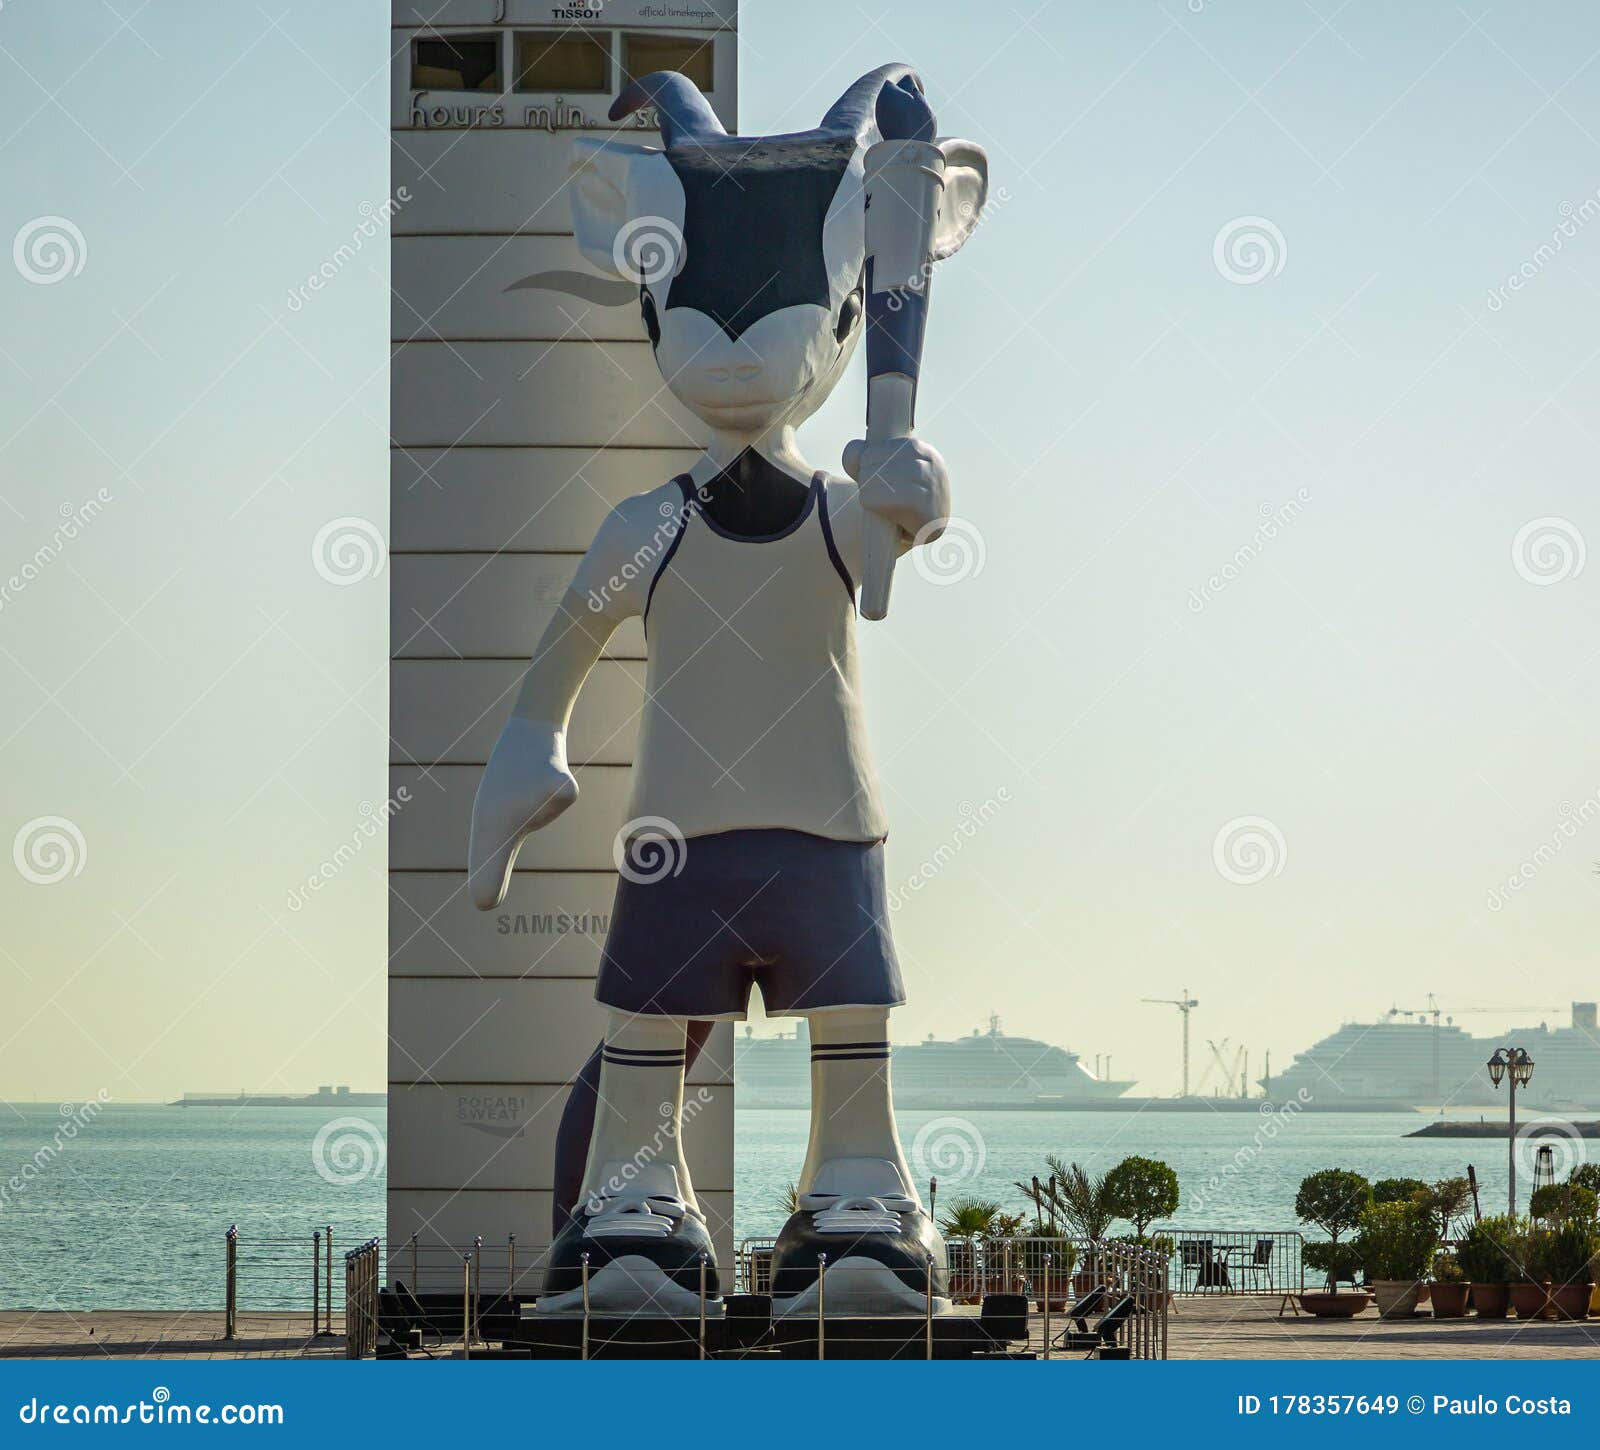 Qatar 2022 World Cup Mascot Editorial Stock Image - Image of 2022